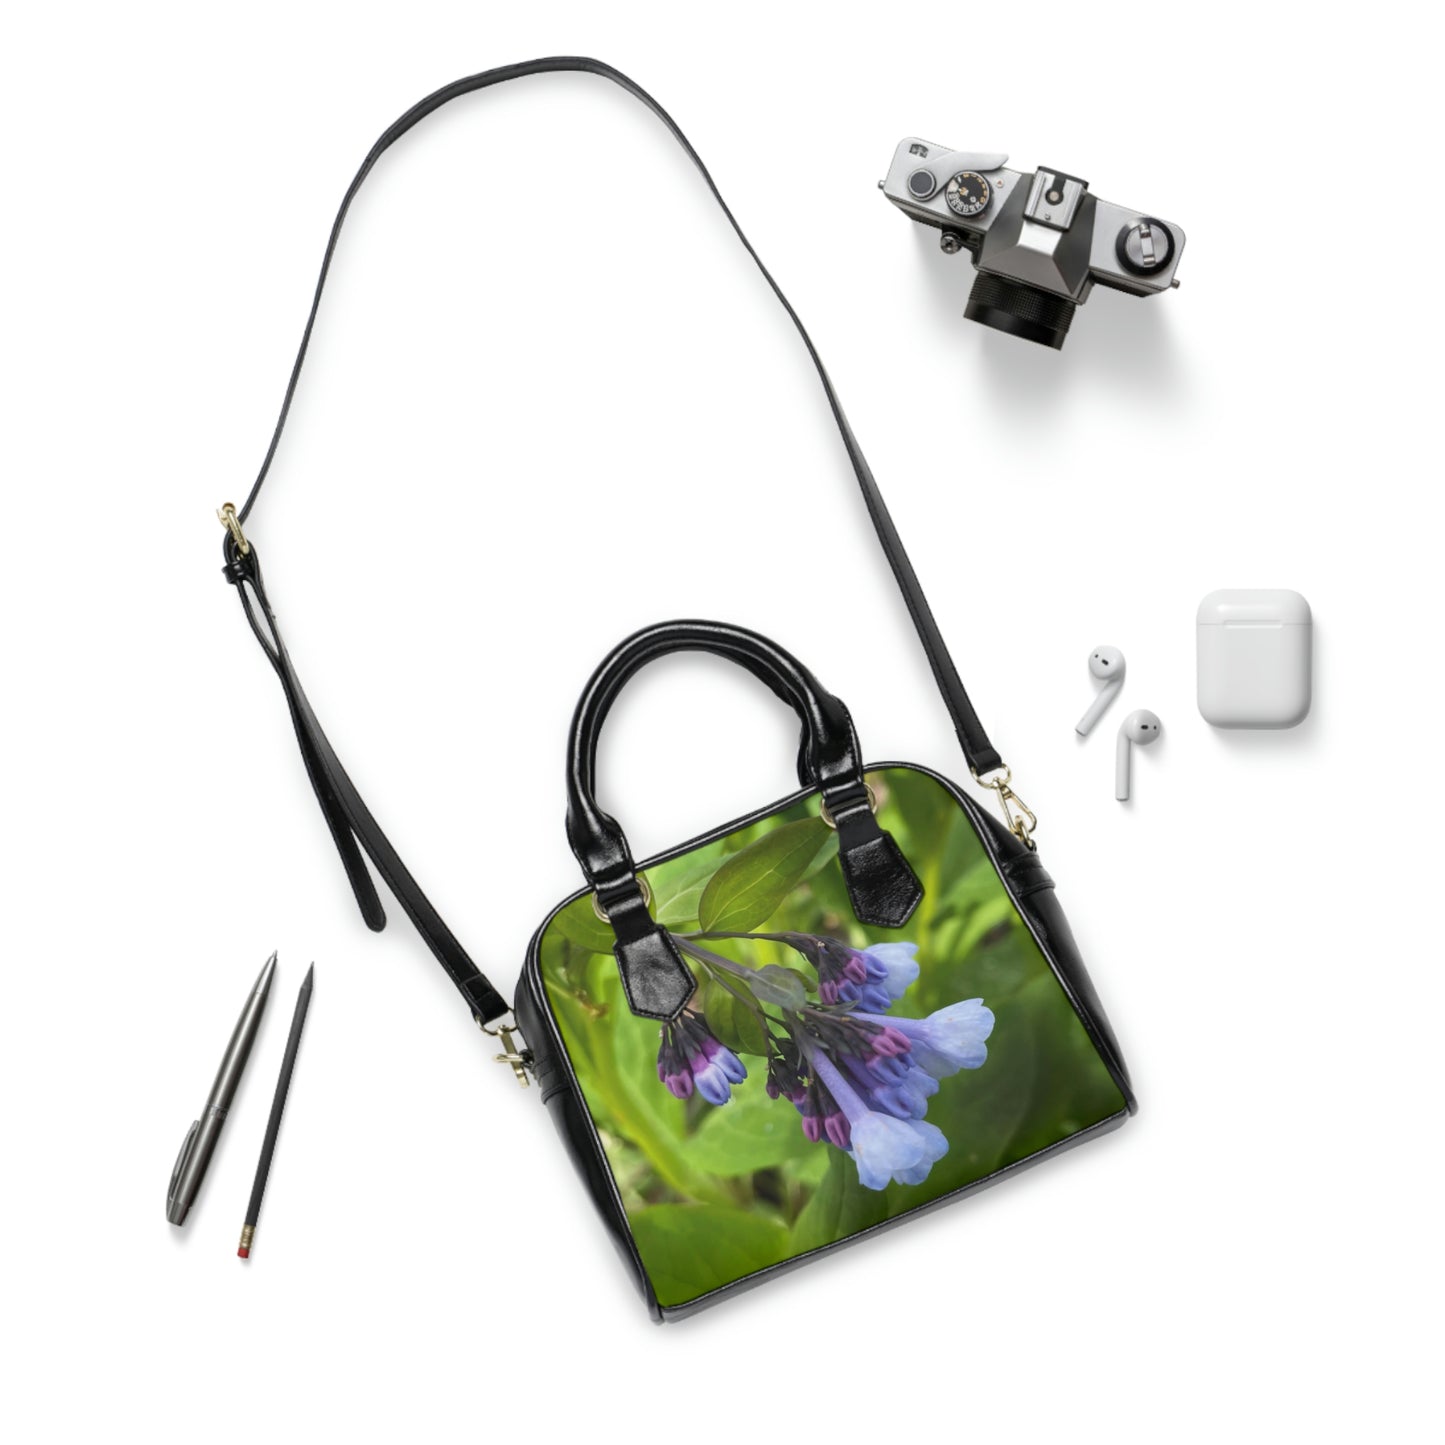 Blue and Purple Wildflowers Shoulder Handbag